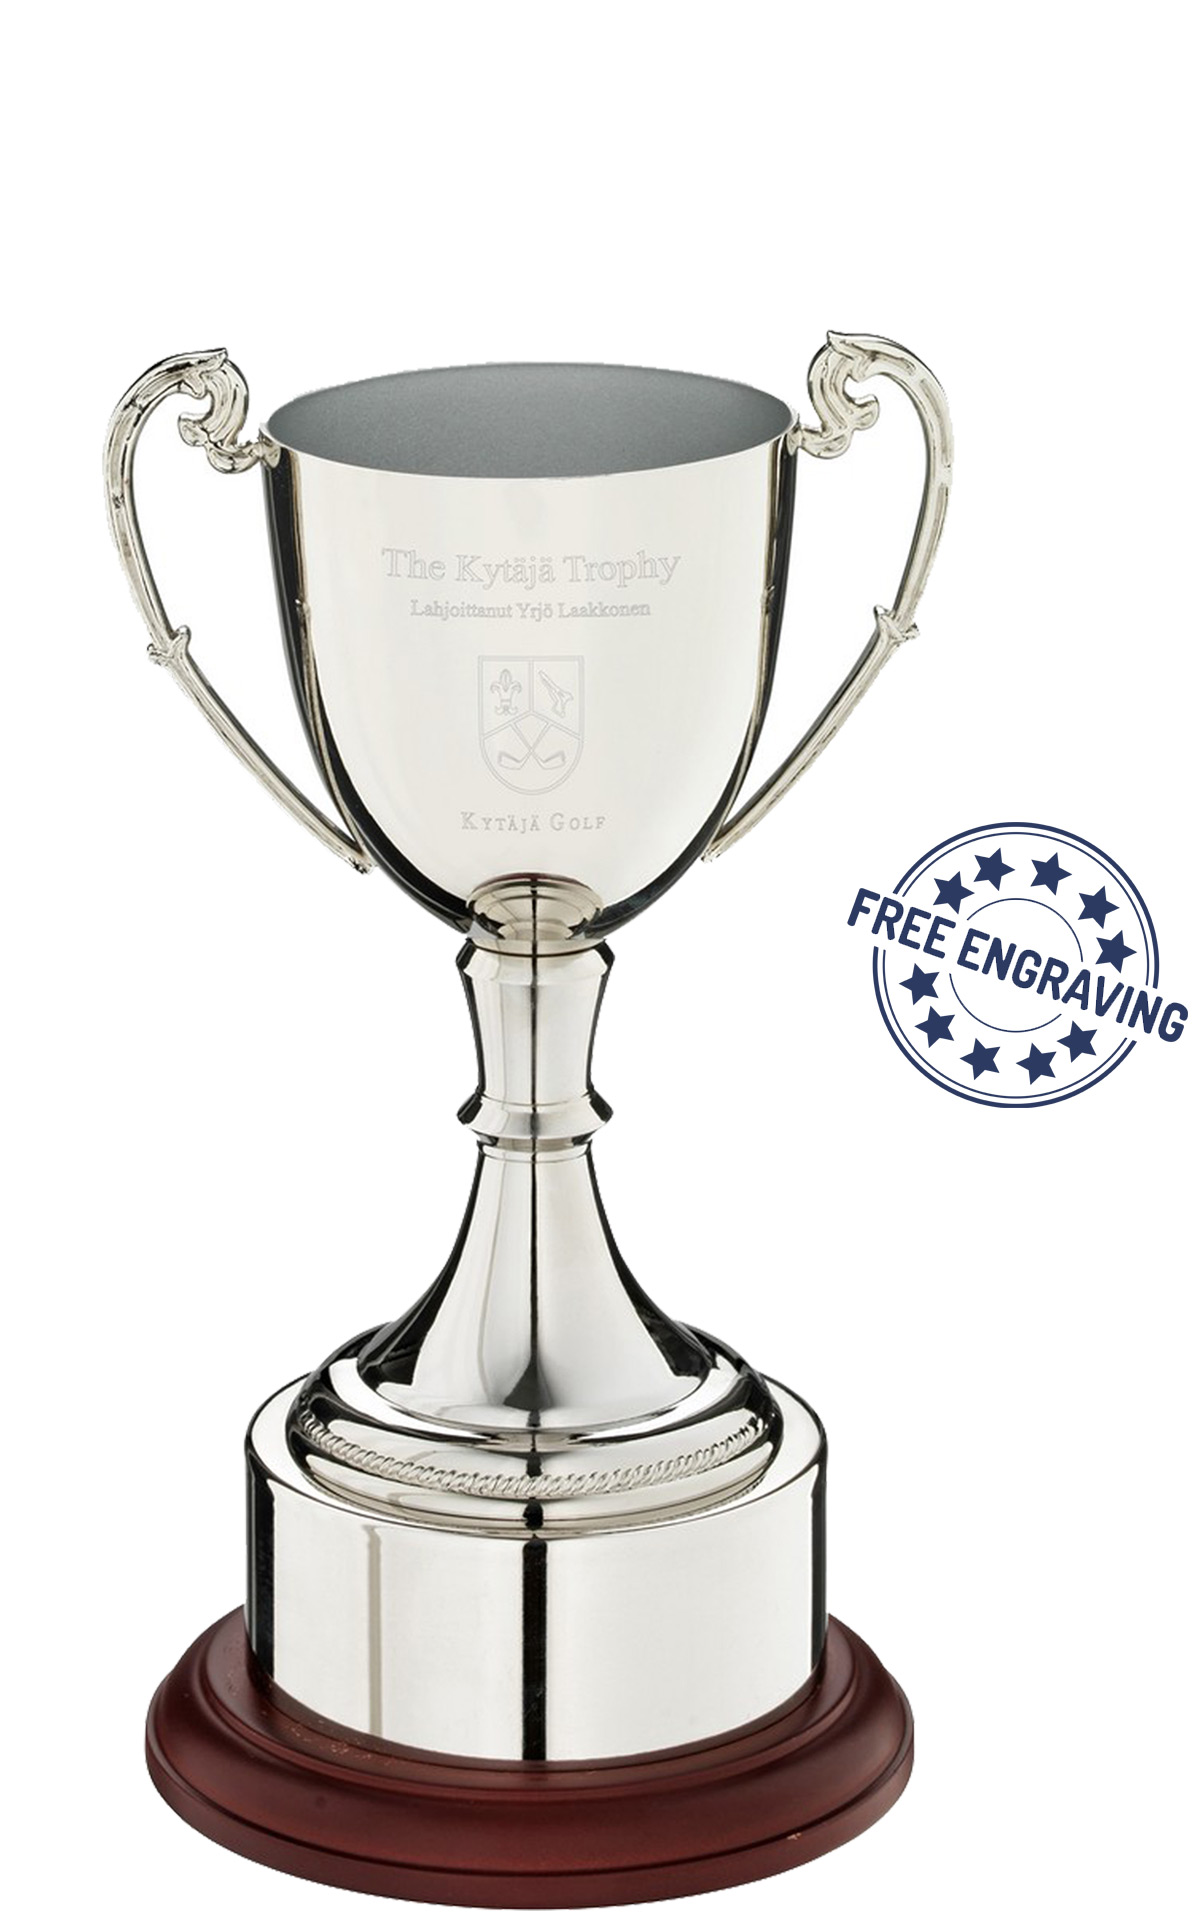 Nickel Plated Cup Trophy FREE ENGRAVING 